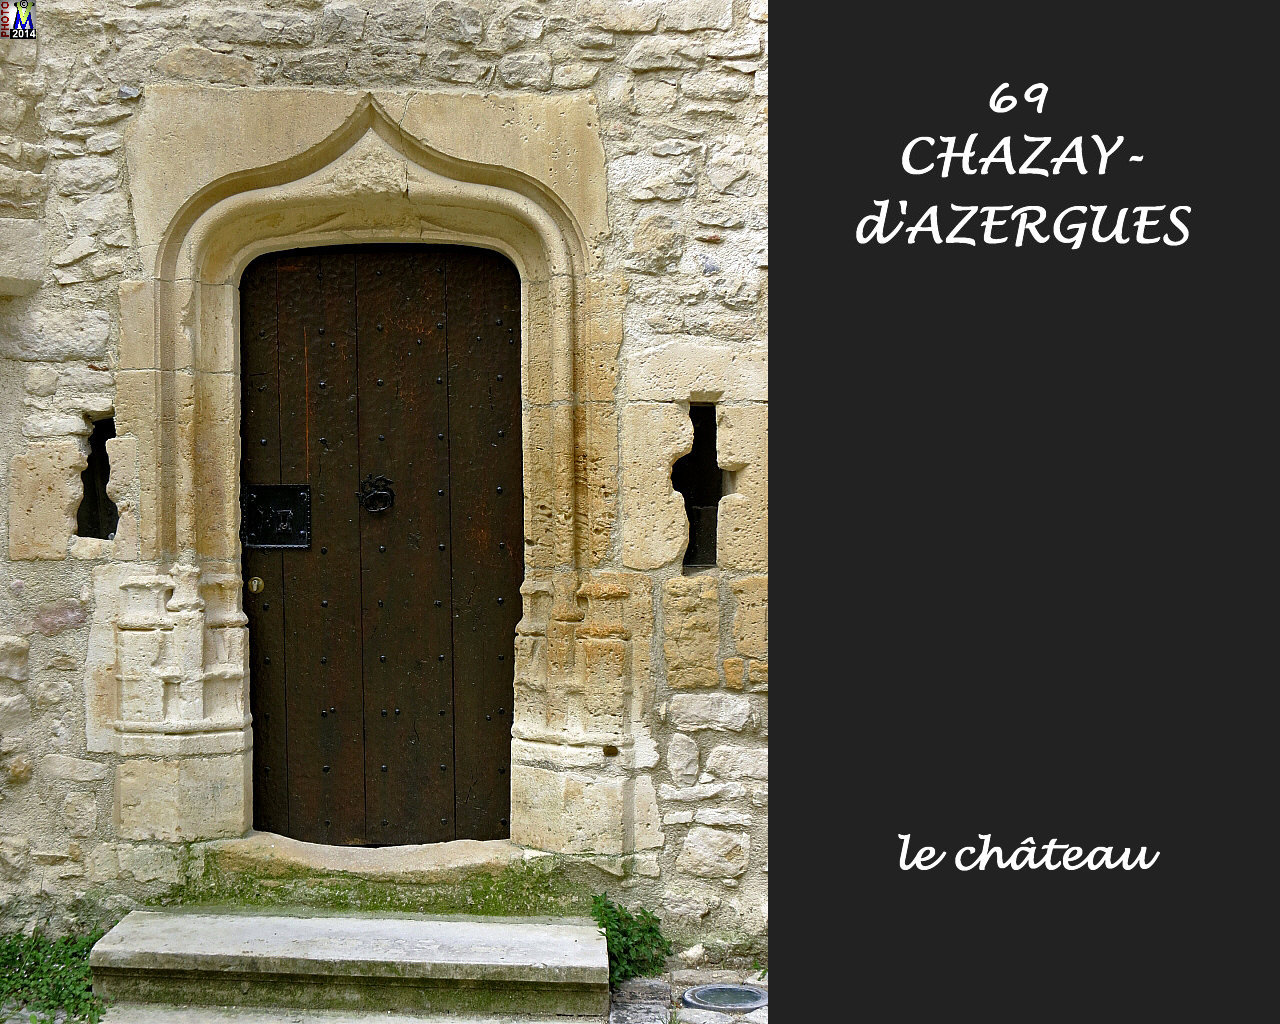 69CHAZAY-AZERGUES_chateau_108.jpg